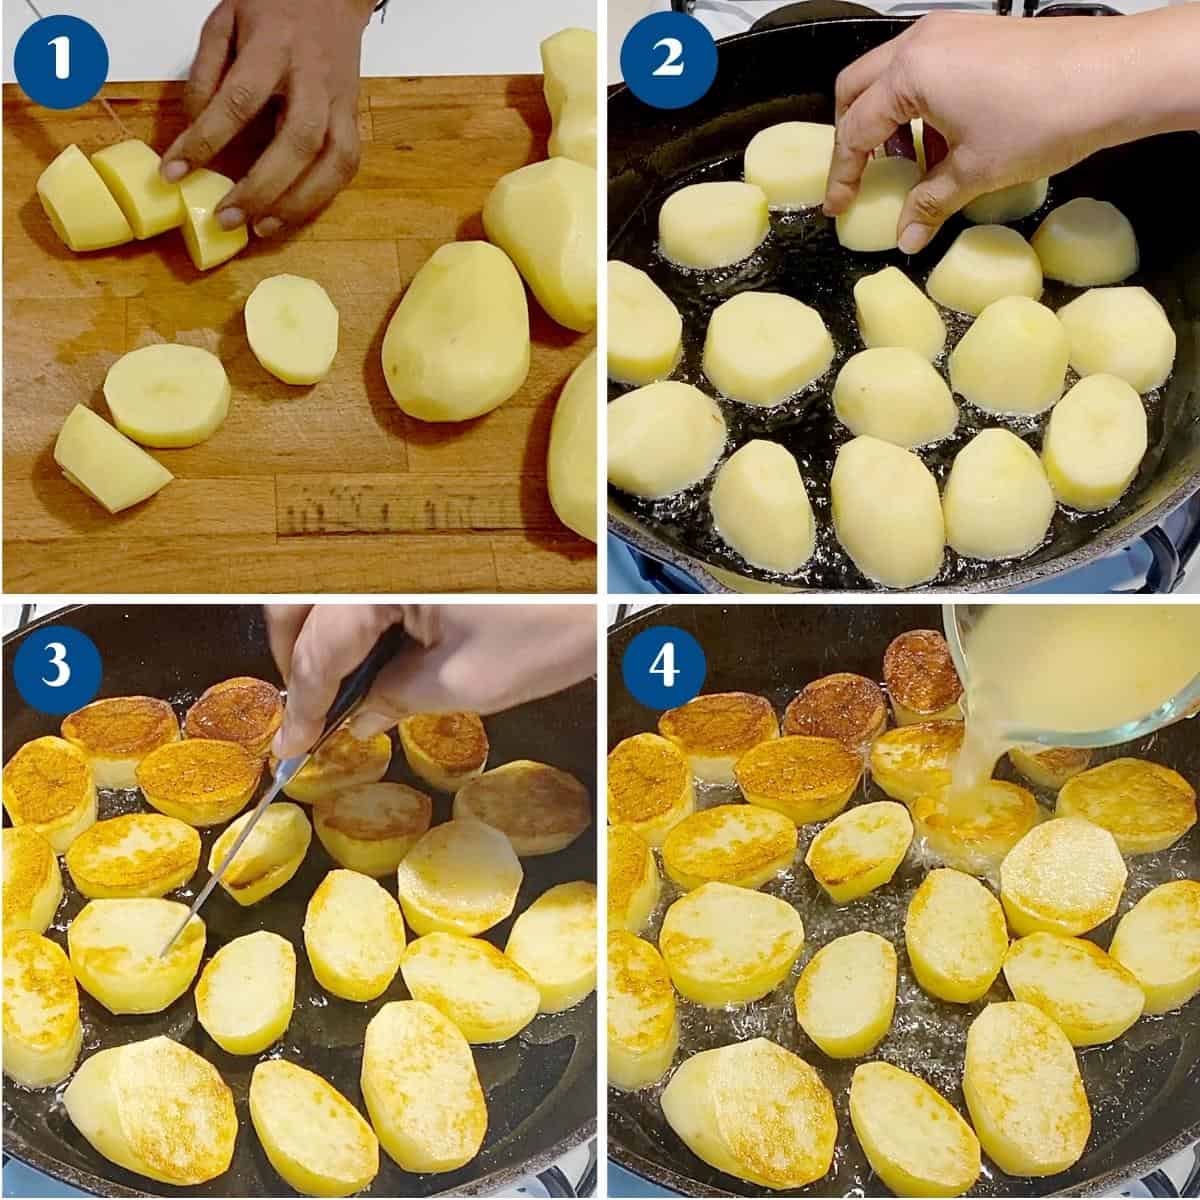 Progress pictures preparing the potatoes.